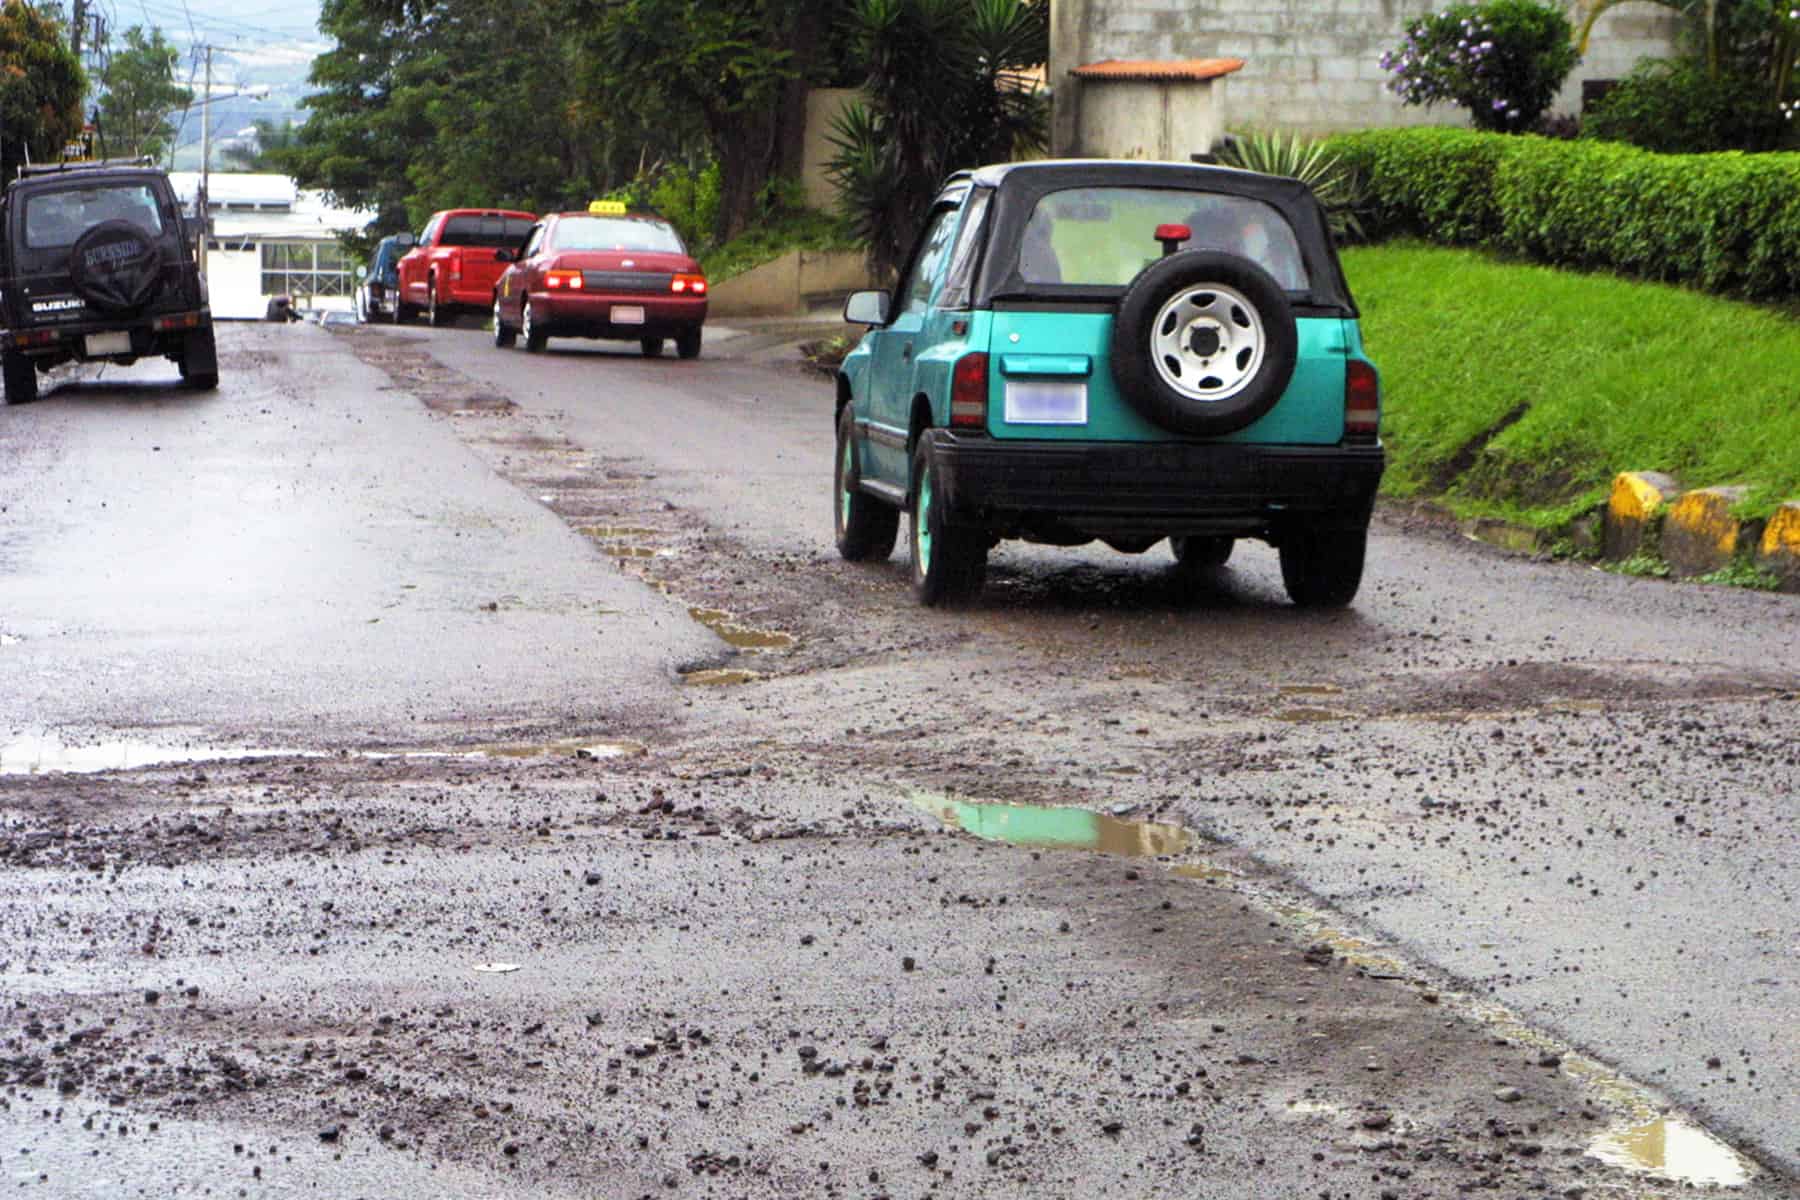 Costa Rica Roads' poor conditions